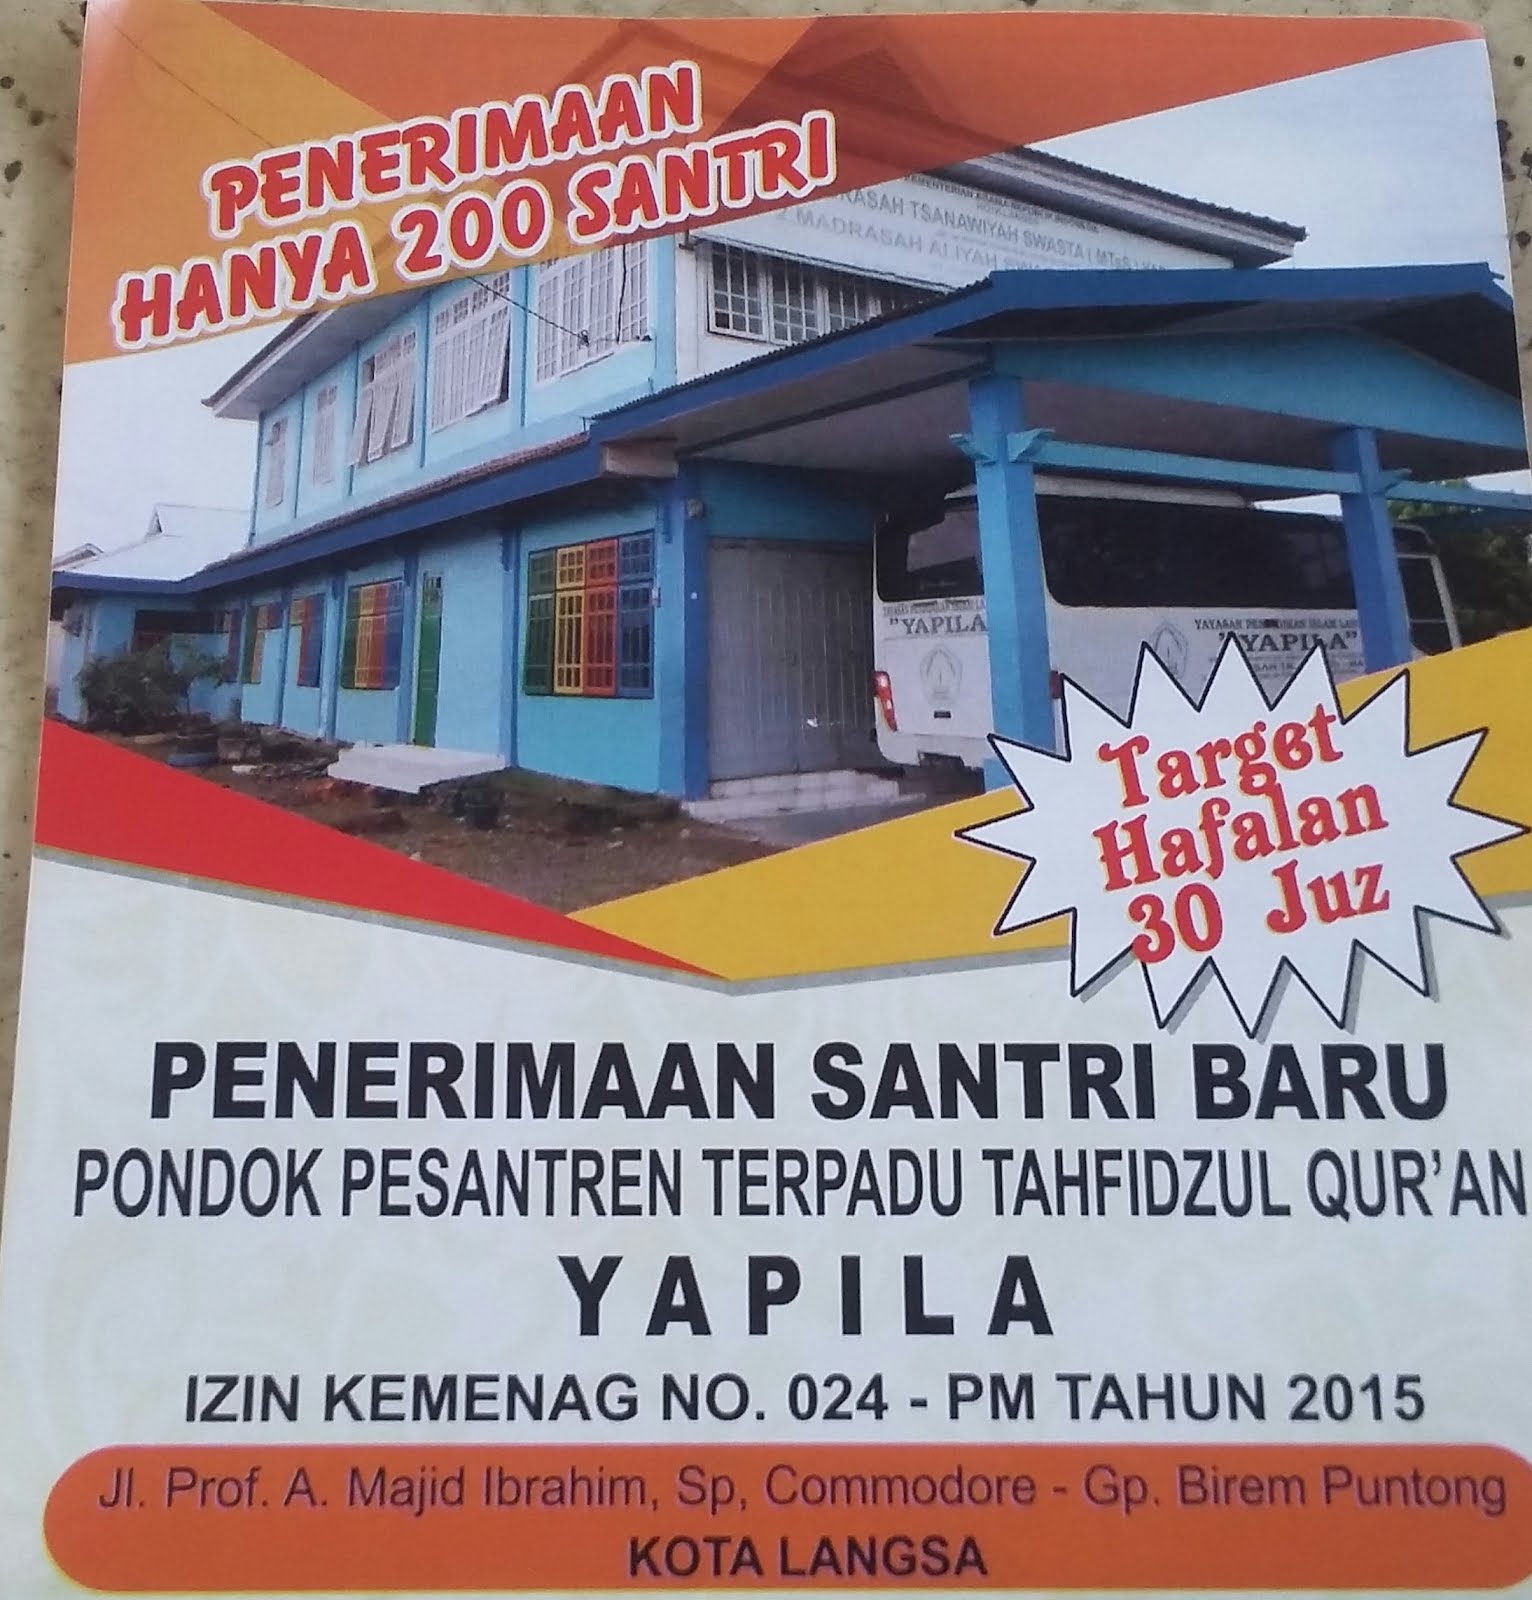 Pondok Pesantren Terpadu Tahfidzul Qur an yang beralamat di Jln Prof A Maid Ibrahim Sp idore Gp Birem Puntong Izin Kemenag No 024 PM tahun 2015